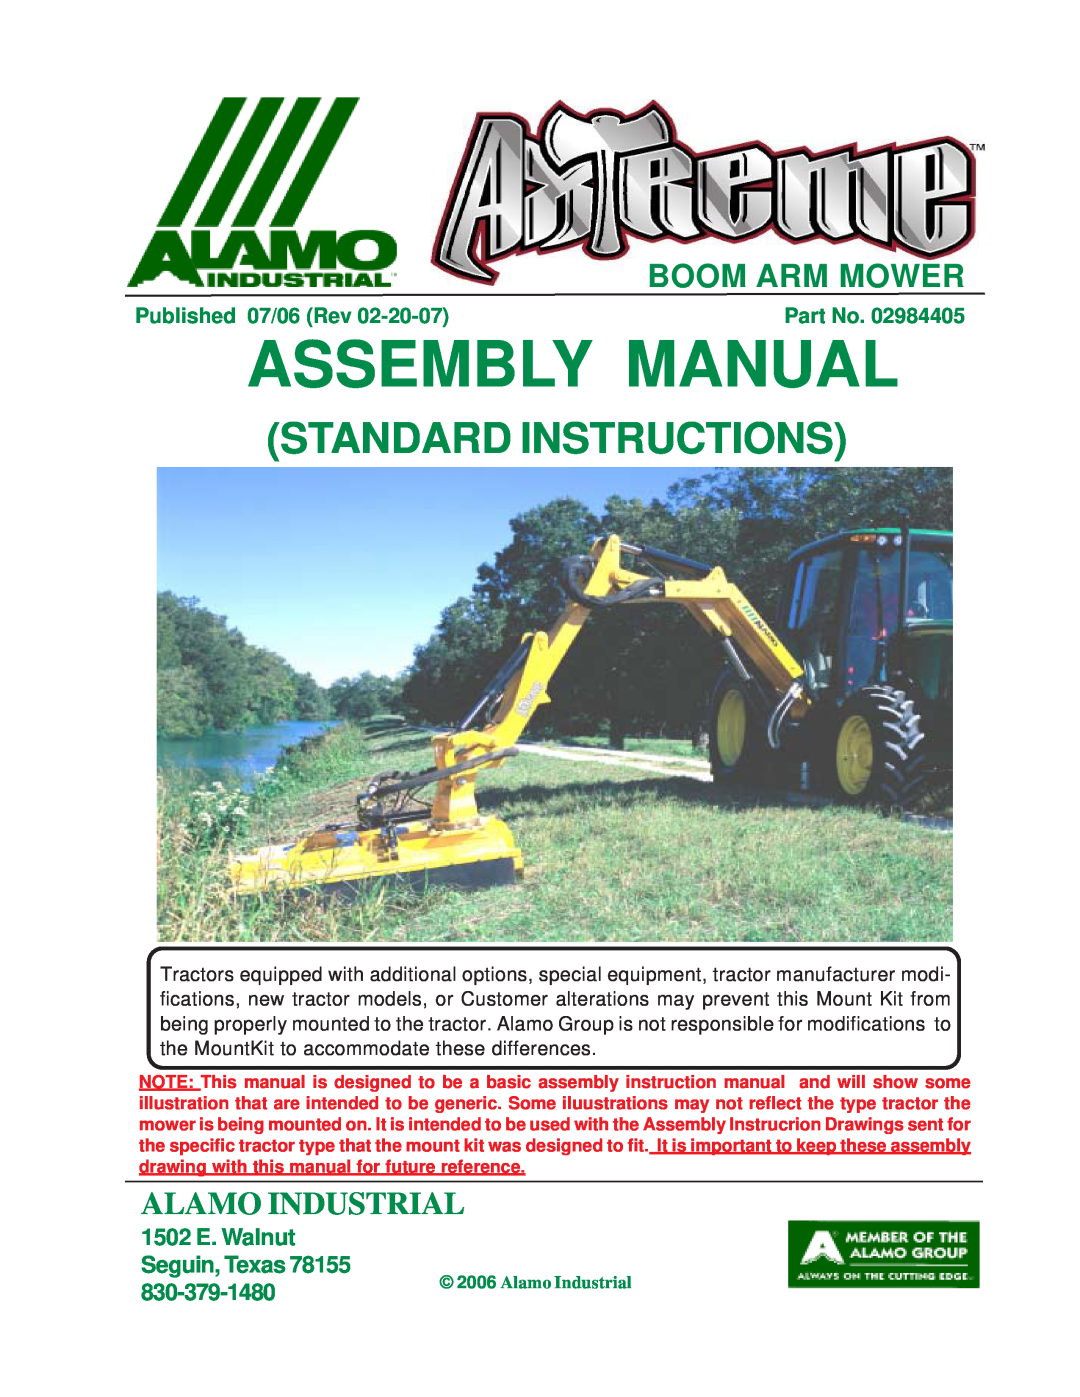 Alamo 02984405 instruction manual Assembly Manual, Standard Instructions, Boom Arm Mower, Alamo Industrial 